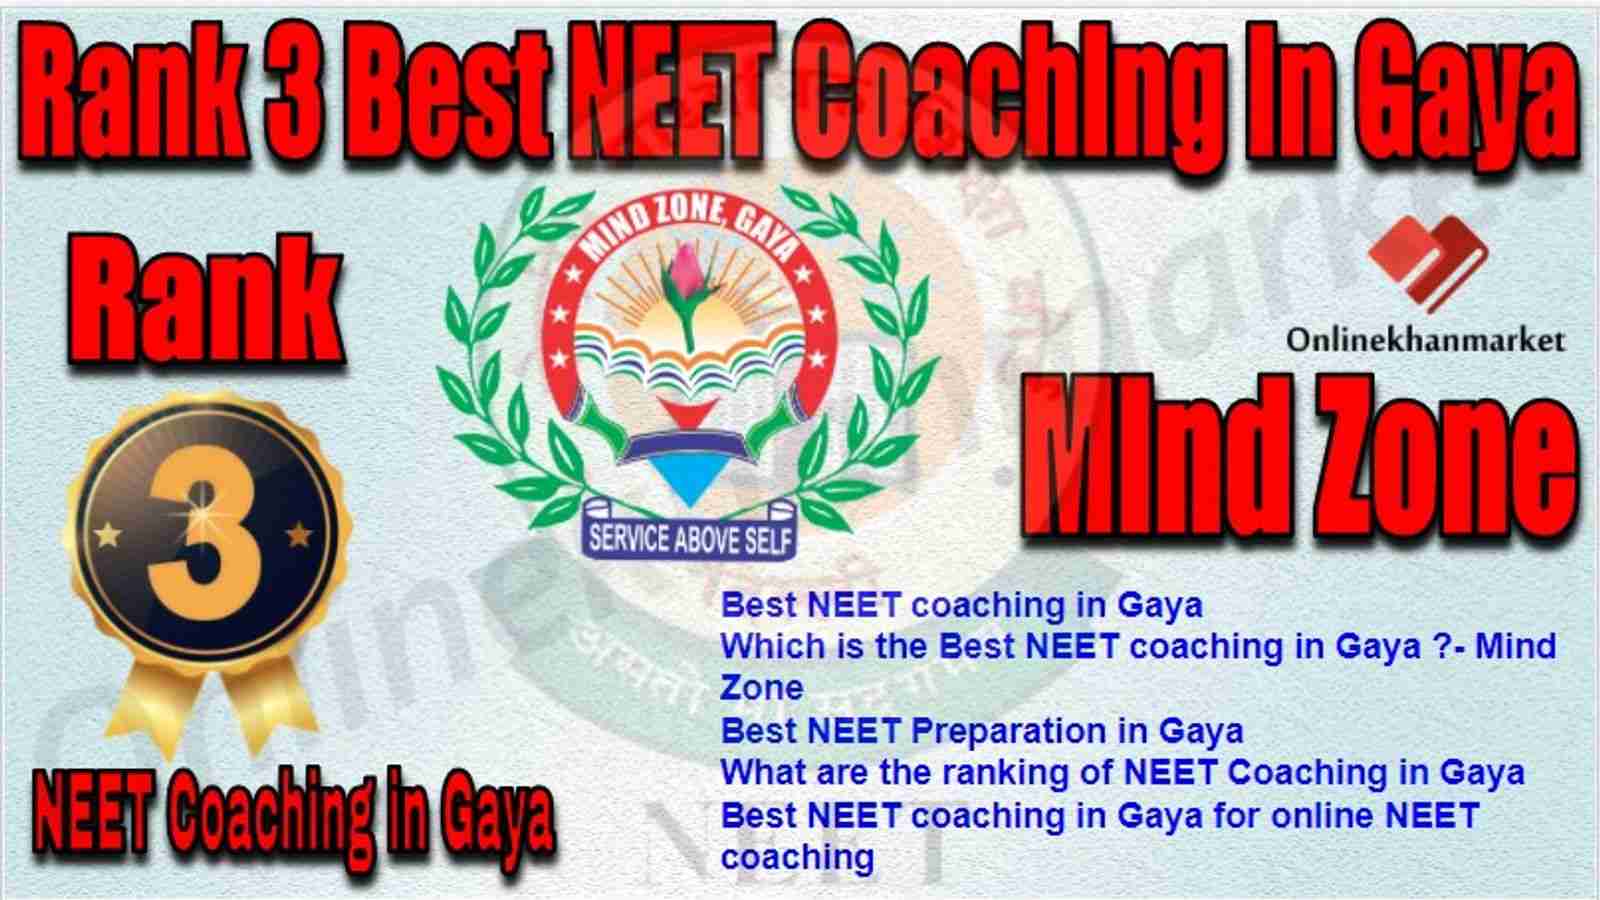 Rank 3 Best NEET Coaching Gaya